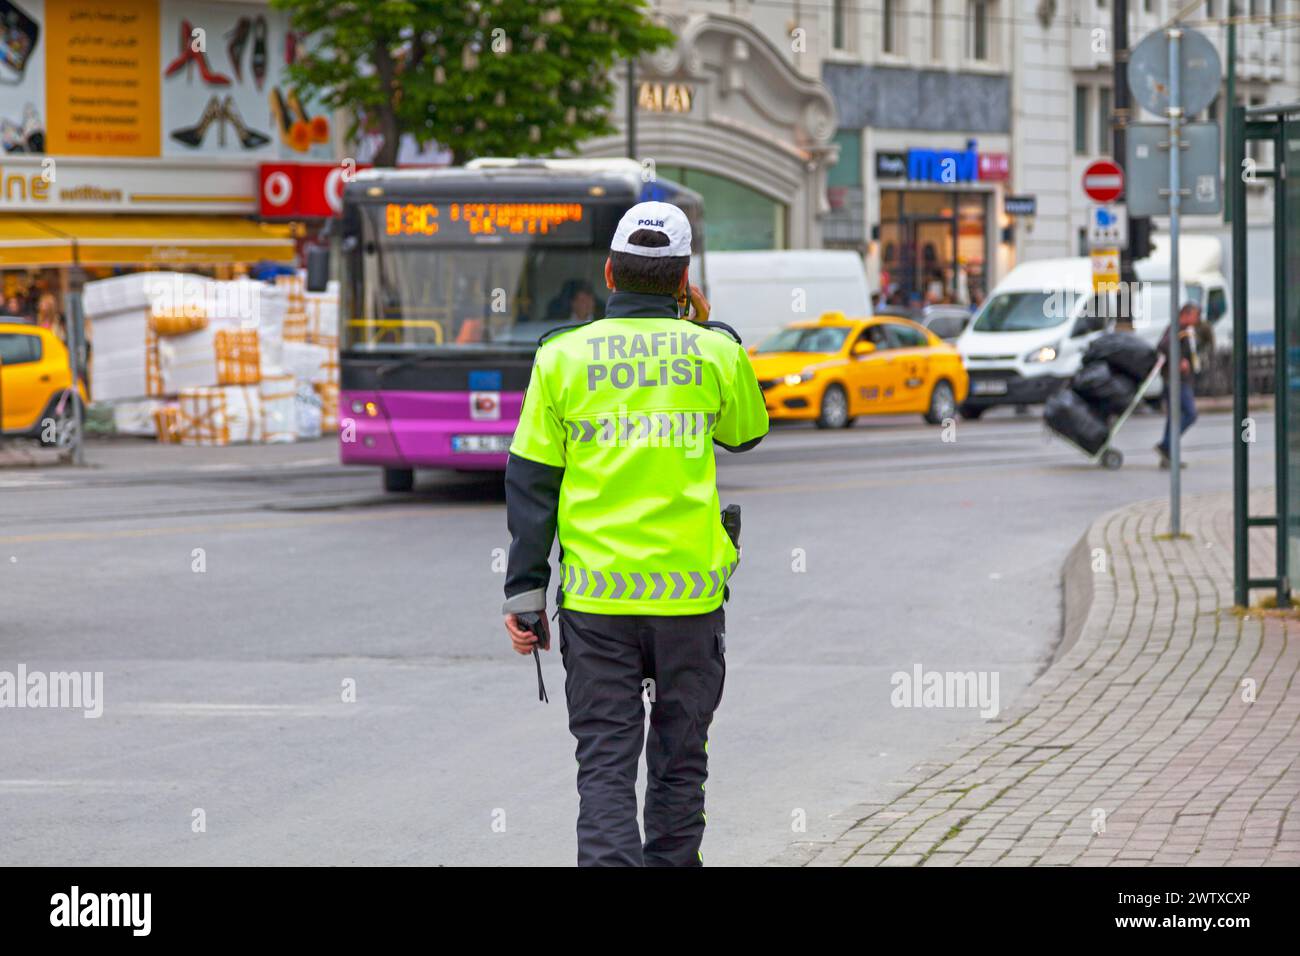 Istanbul, Turkey - May 08 2019: Officer of the Trafik polisi (Traffic police) near the Bazaar. Stock Photo